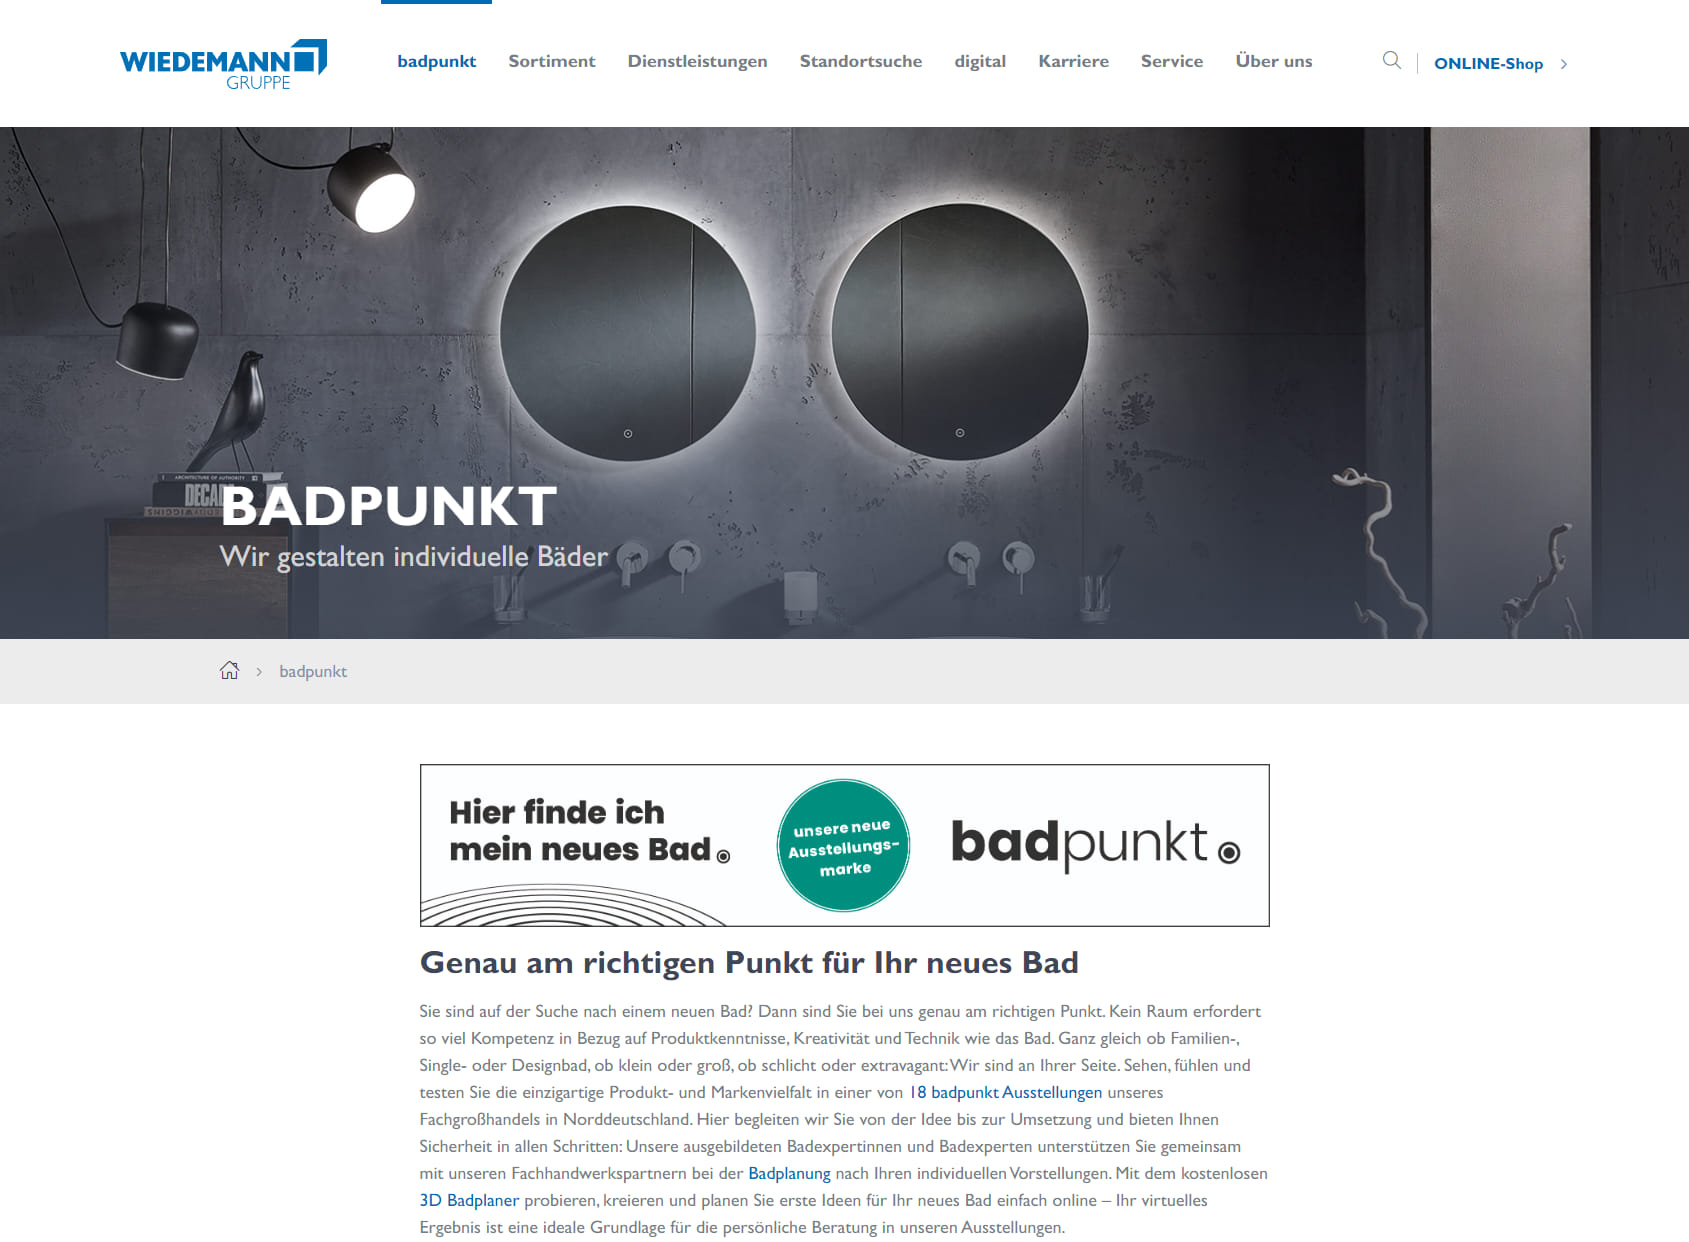 badpunkt Göttingen - Badausstellung der WIEDEMANN GmbH & Co. KG